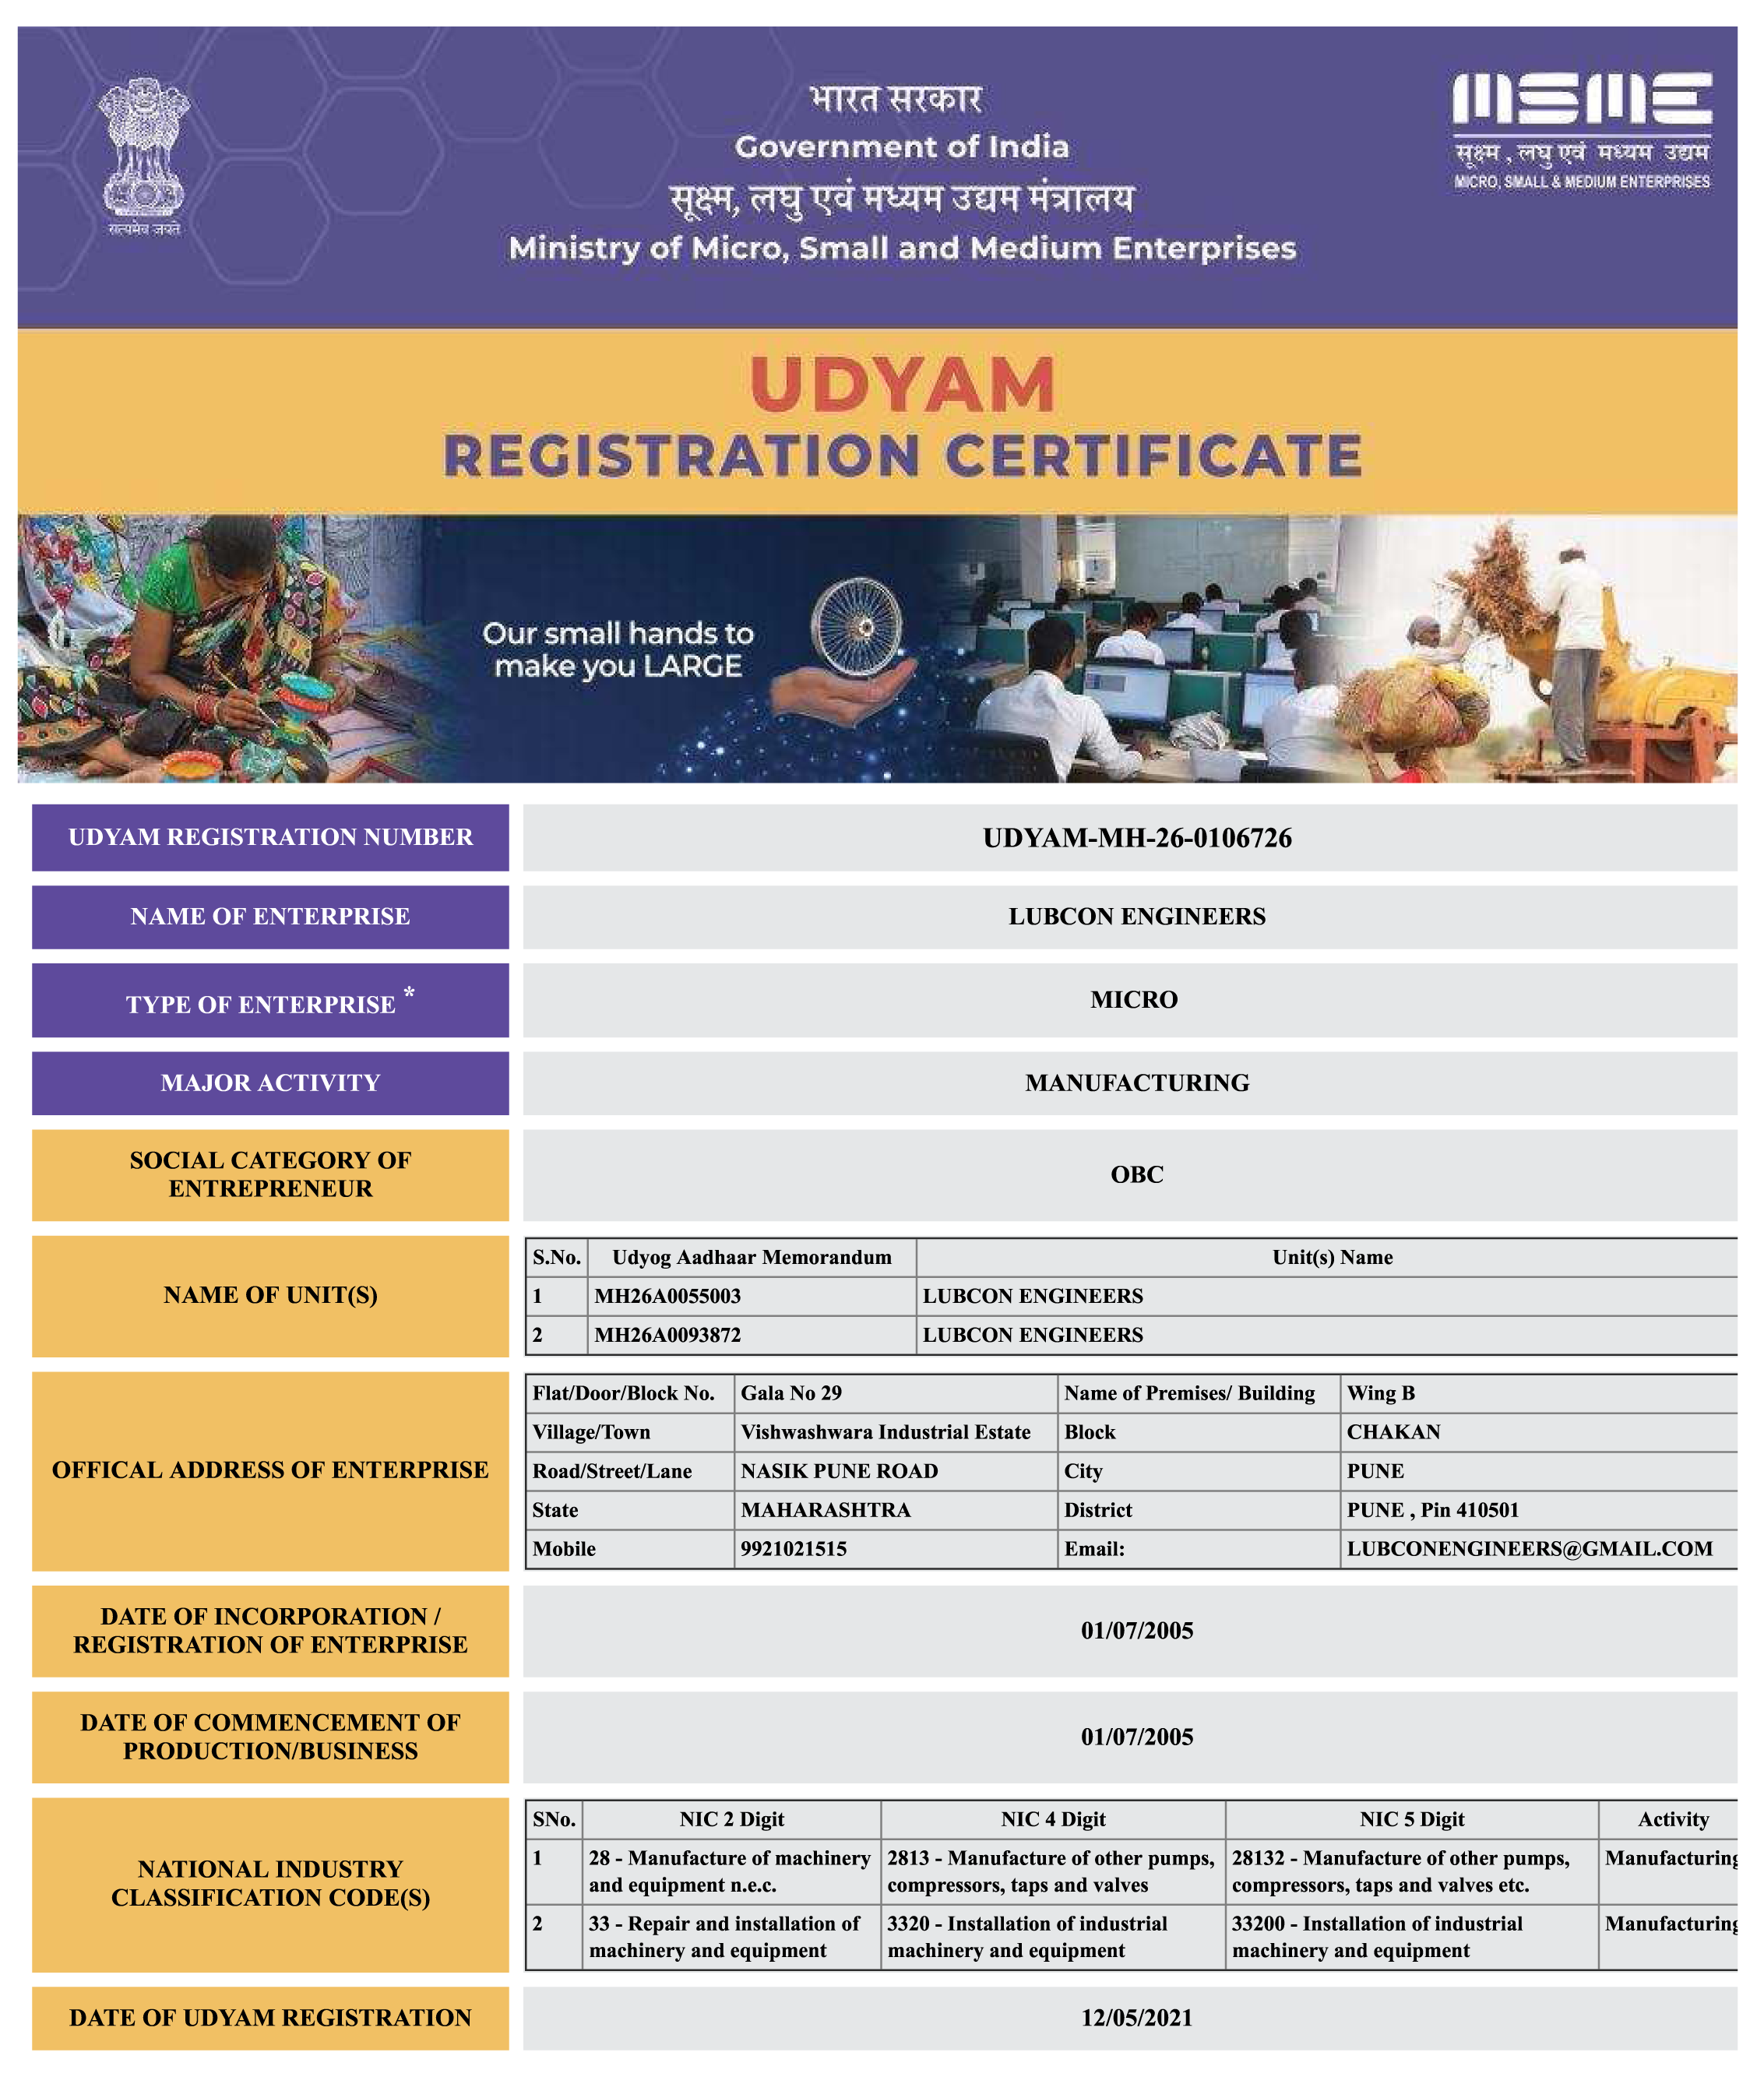 udyam-registration-certificate_29may2021-1